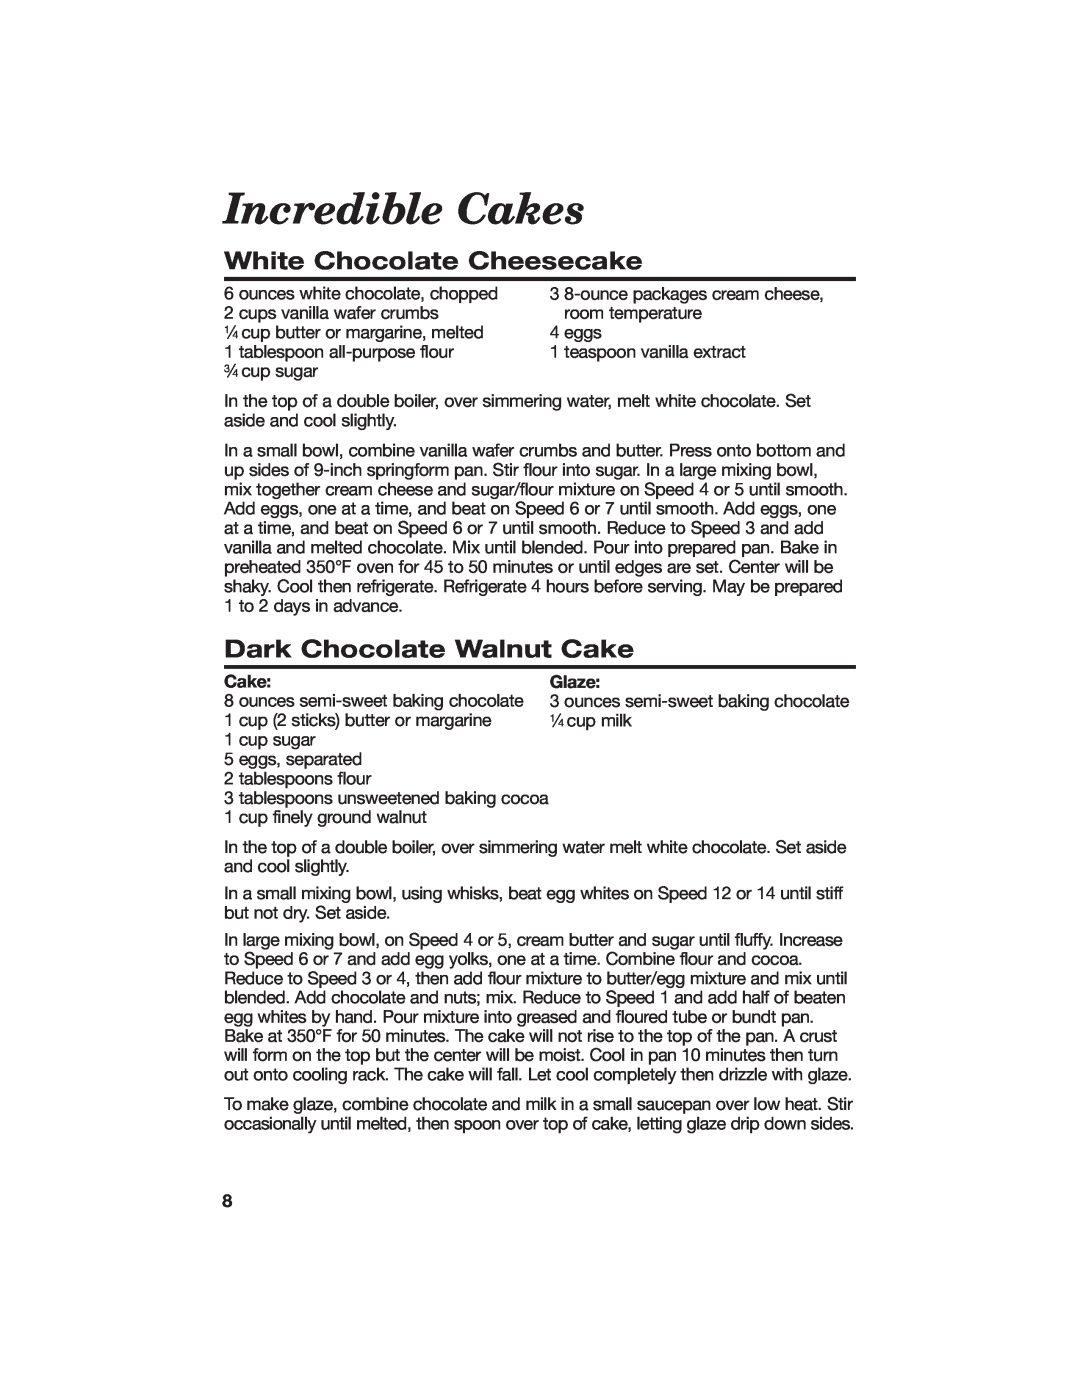 Hamilton Beach 840056500 manual Incredible Cakes, White Chocolate Cheesecake, Dark Chocolate Walnut Cake, Glaze 